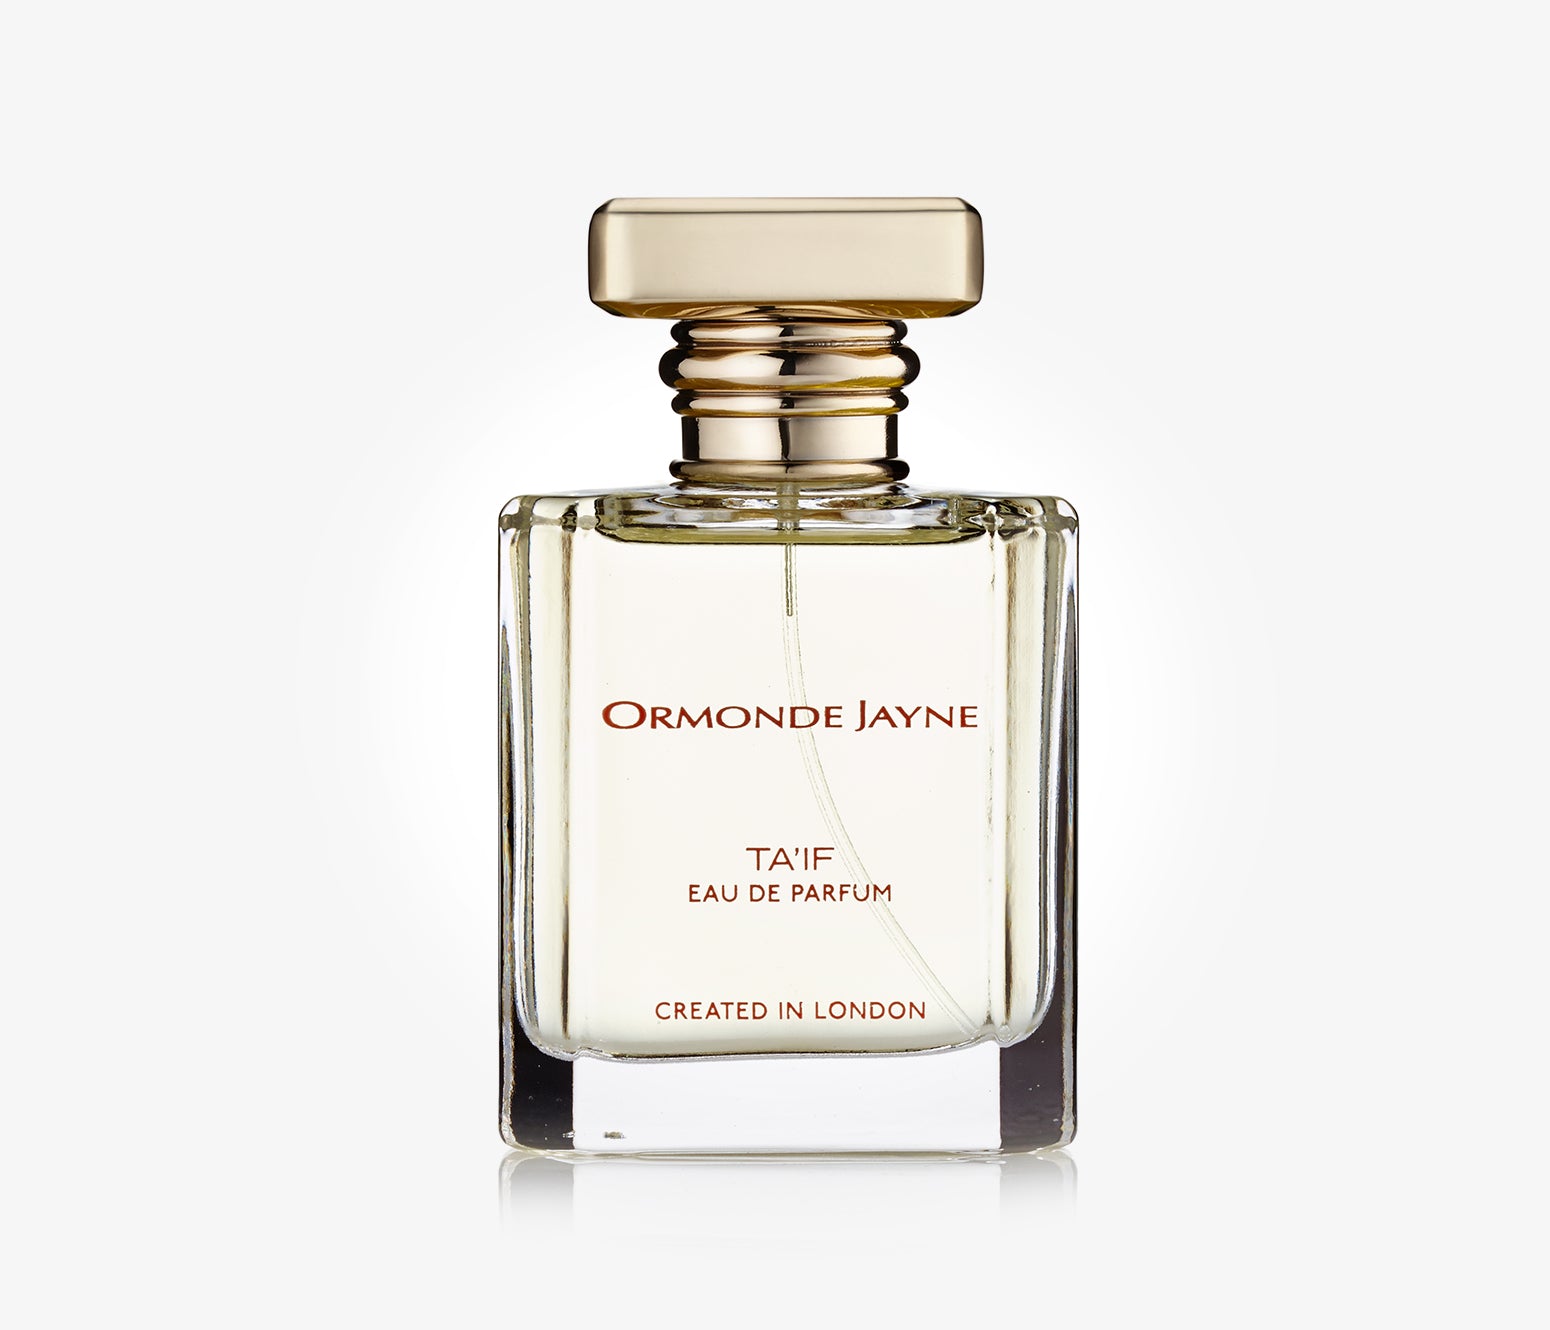 Ormonde Jayne - Ta'if - 50ml - CWY001 - Product Image - Fragrance - Les Senteurs